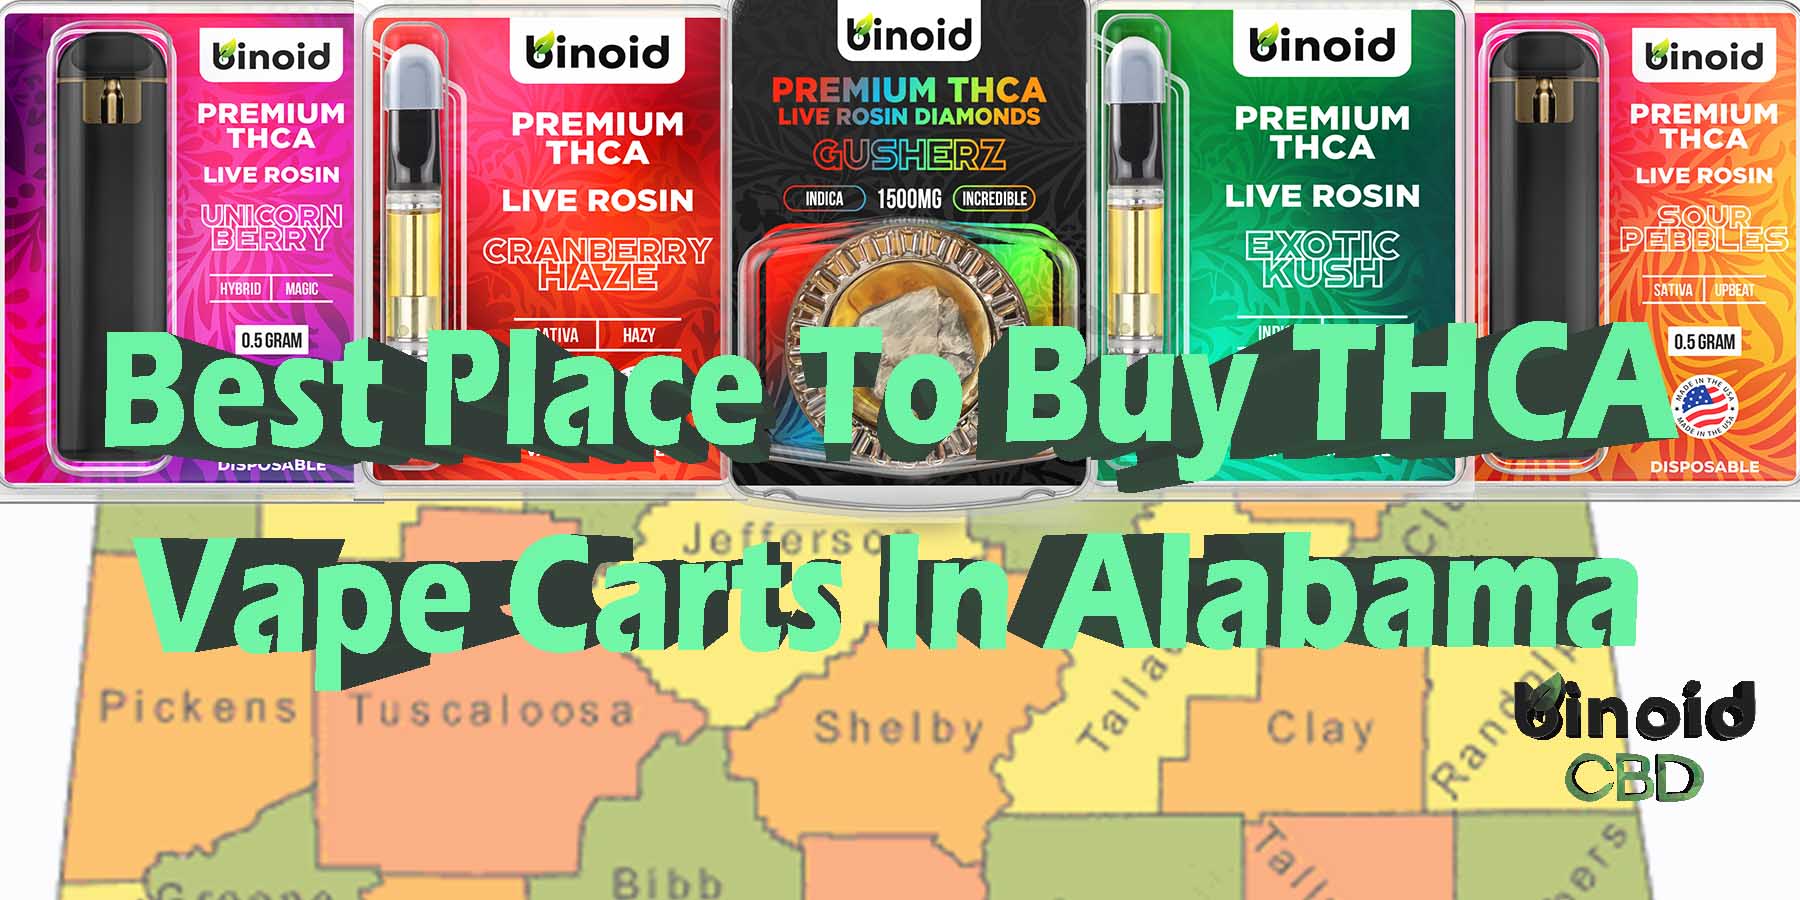 Buy THCA Vape Cartridges Carts Alabama Get Online Near Me For Sale Best Brand Strongest Real Legal Store Shop Reddit